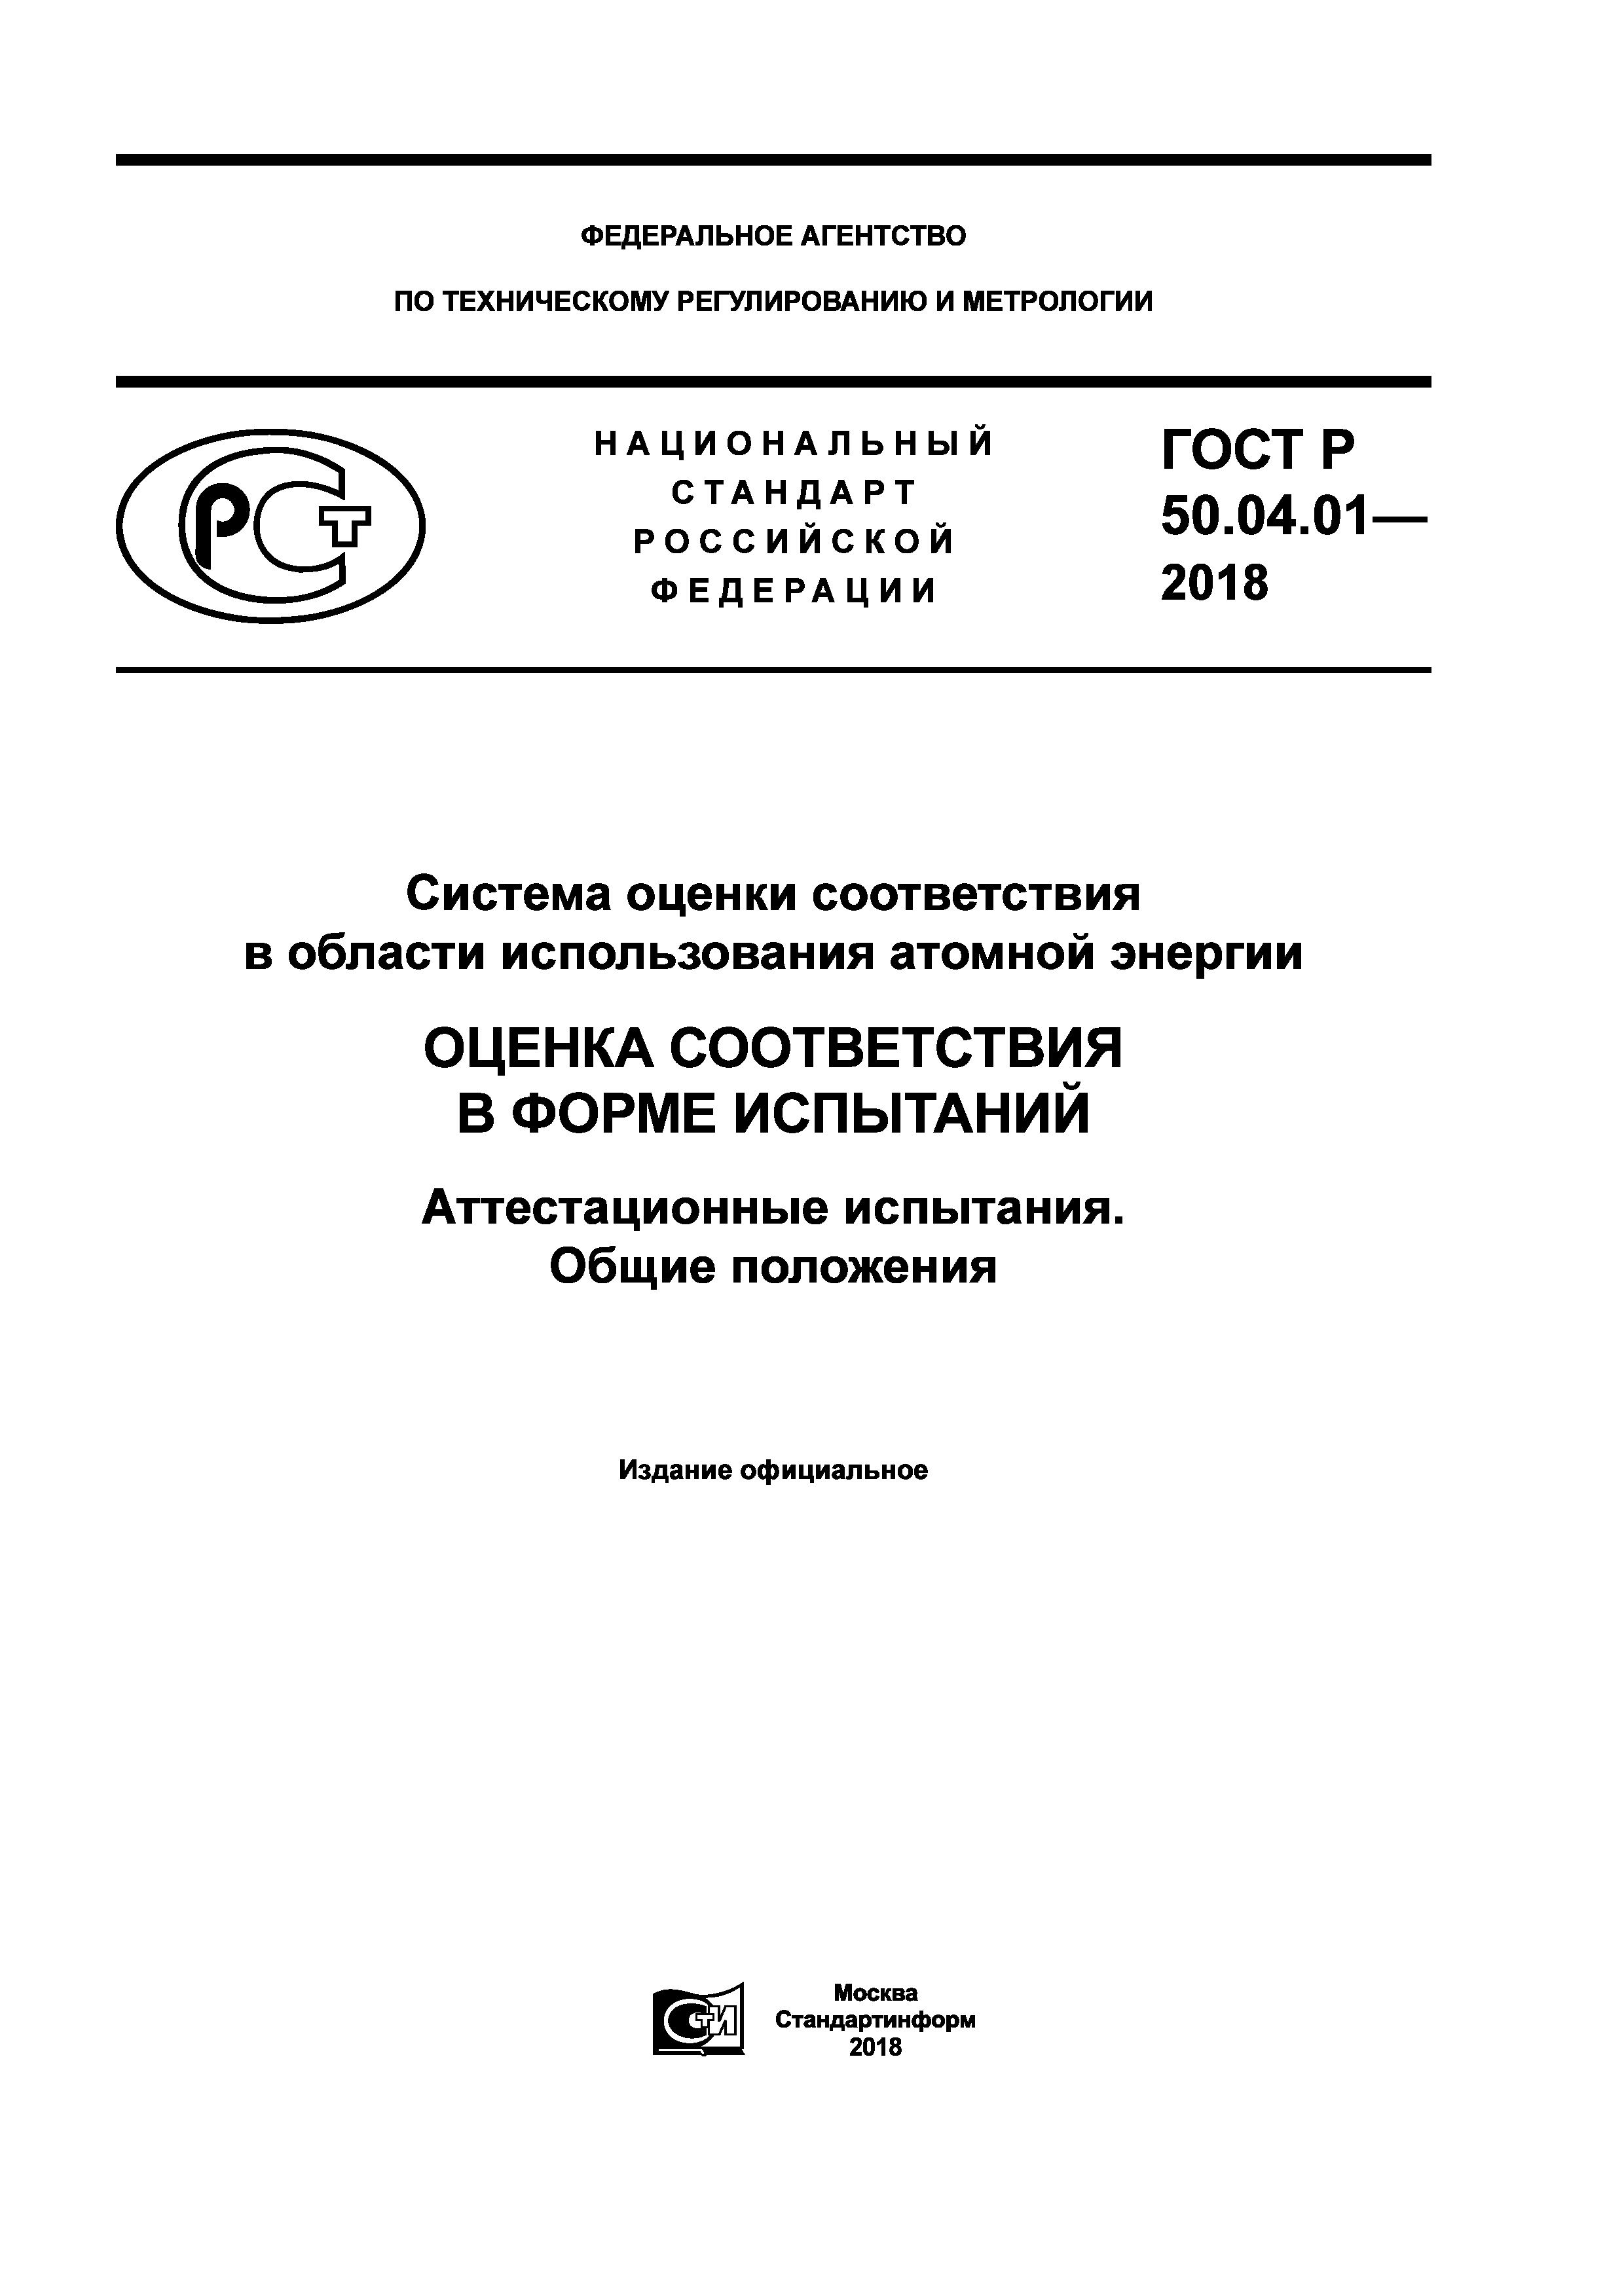 ГОСТ Р 50.04.01-2018